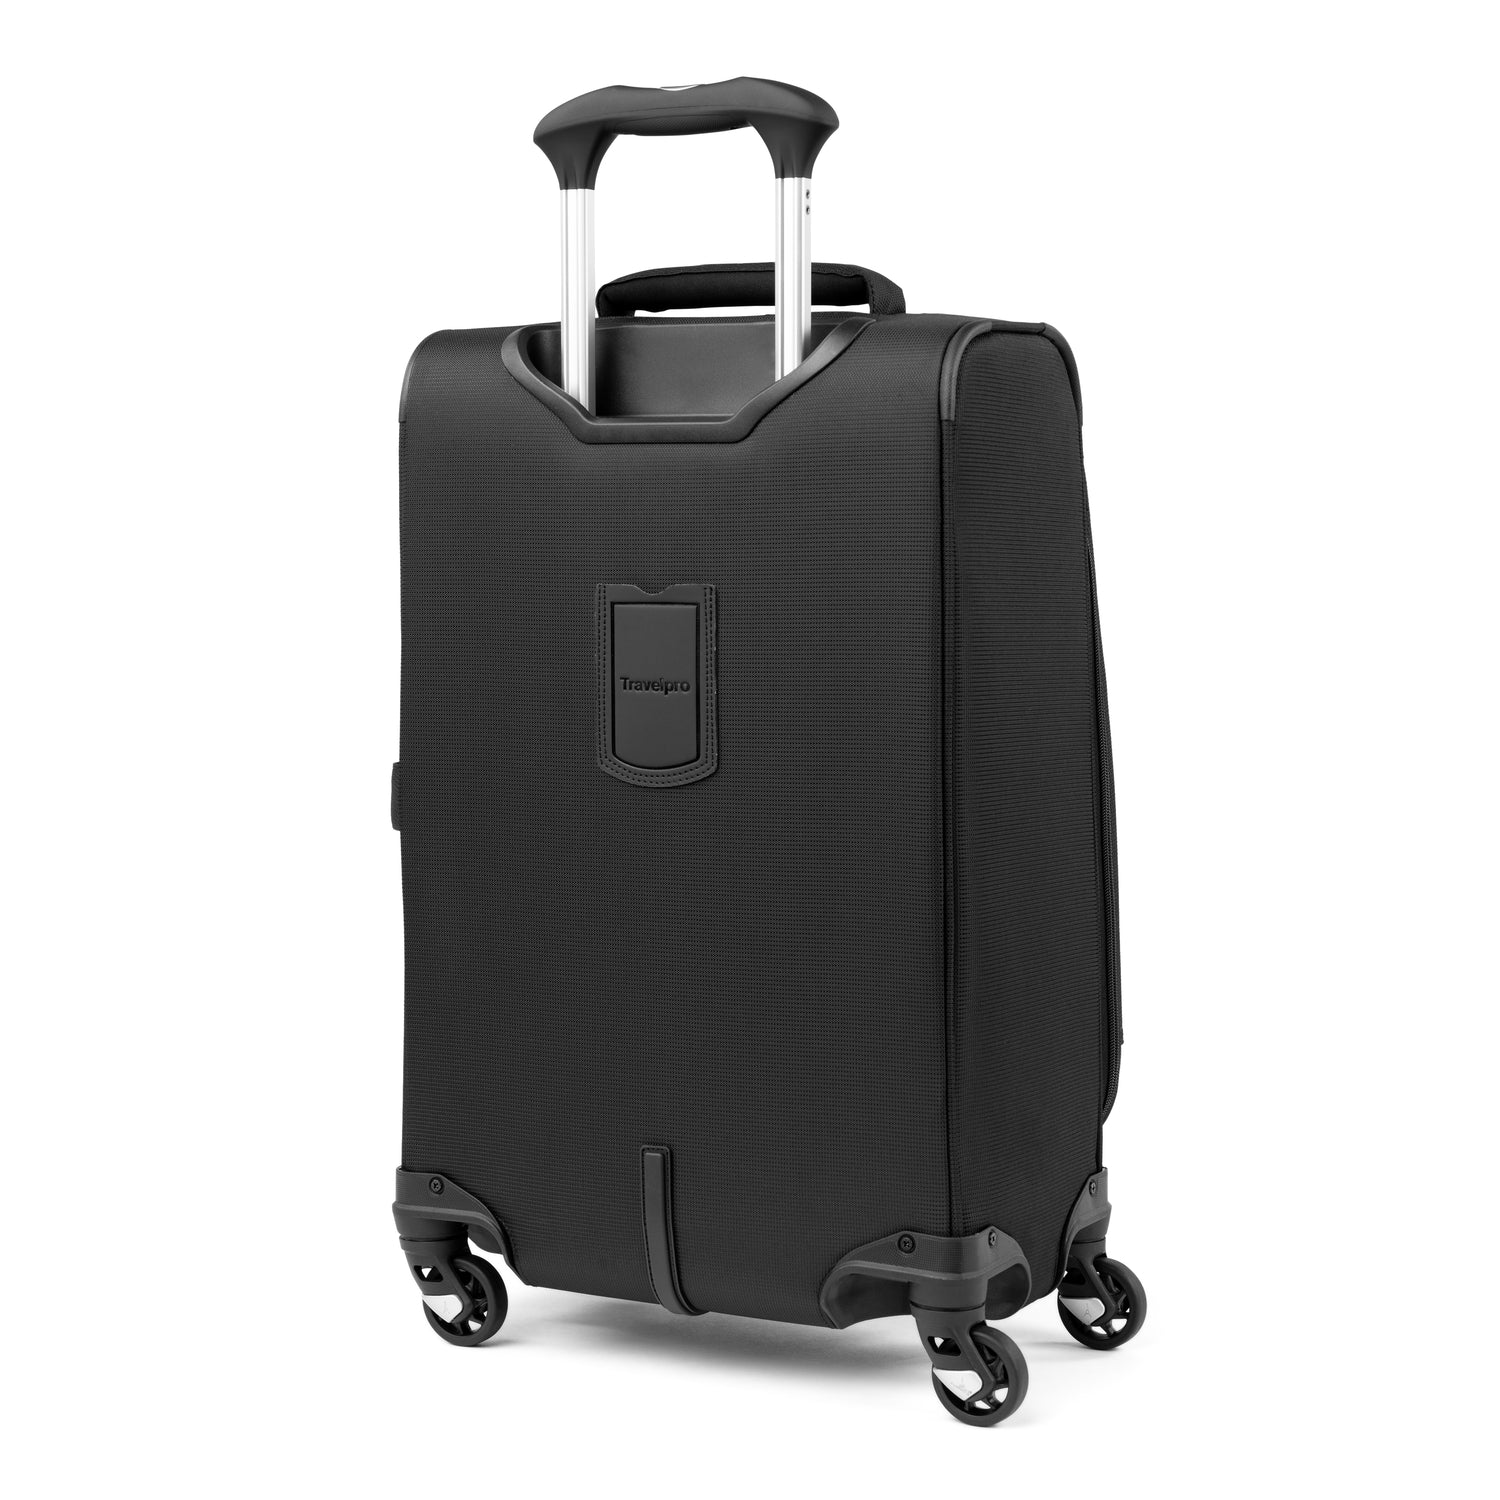 Maxlite 5 21" / 25" Luggage Set